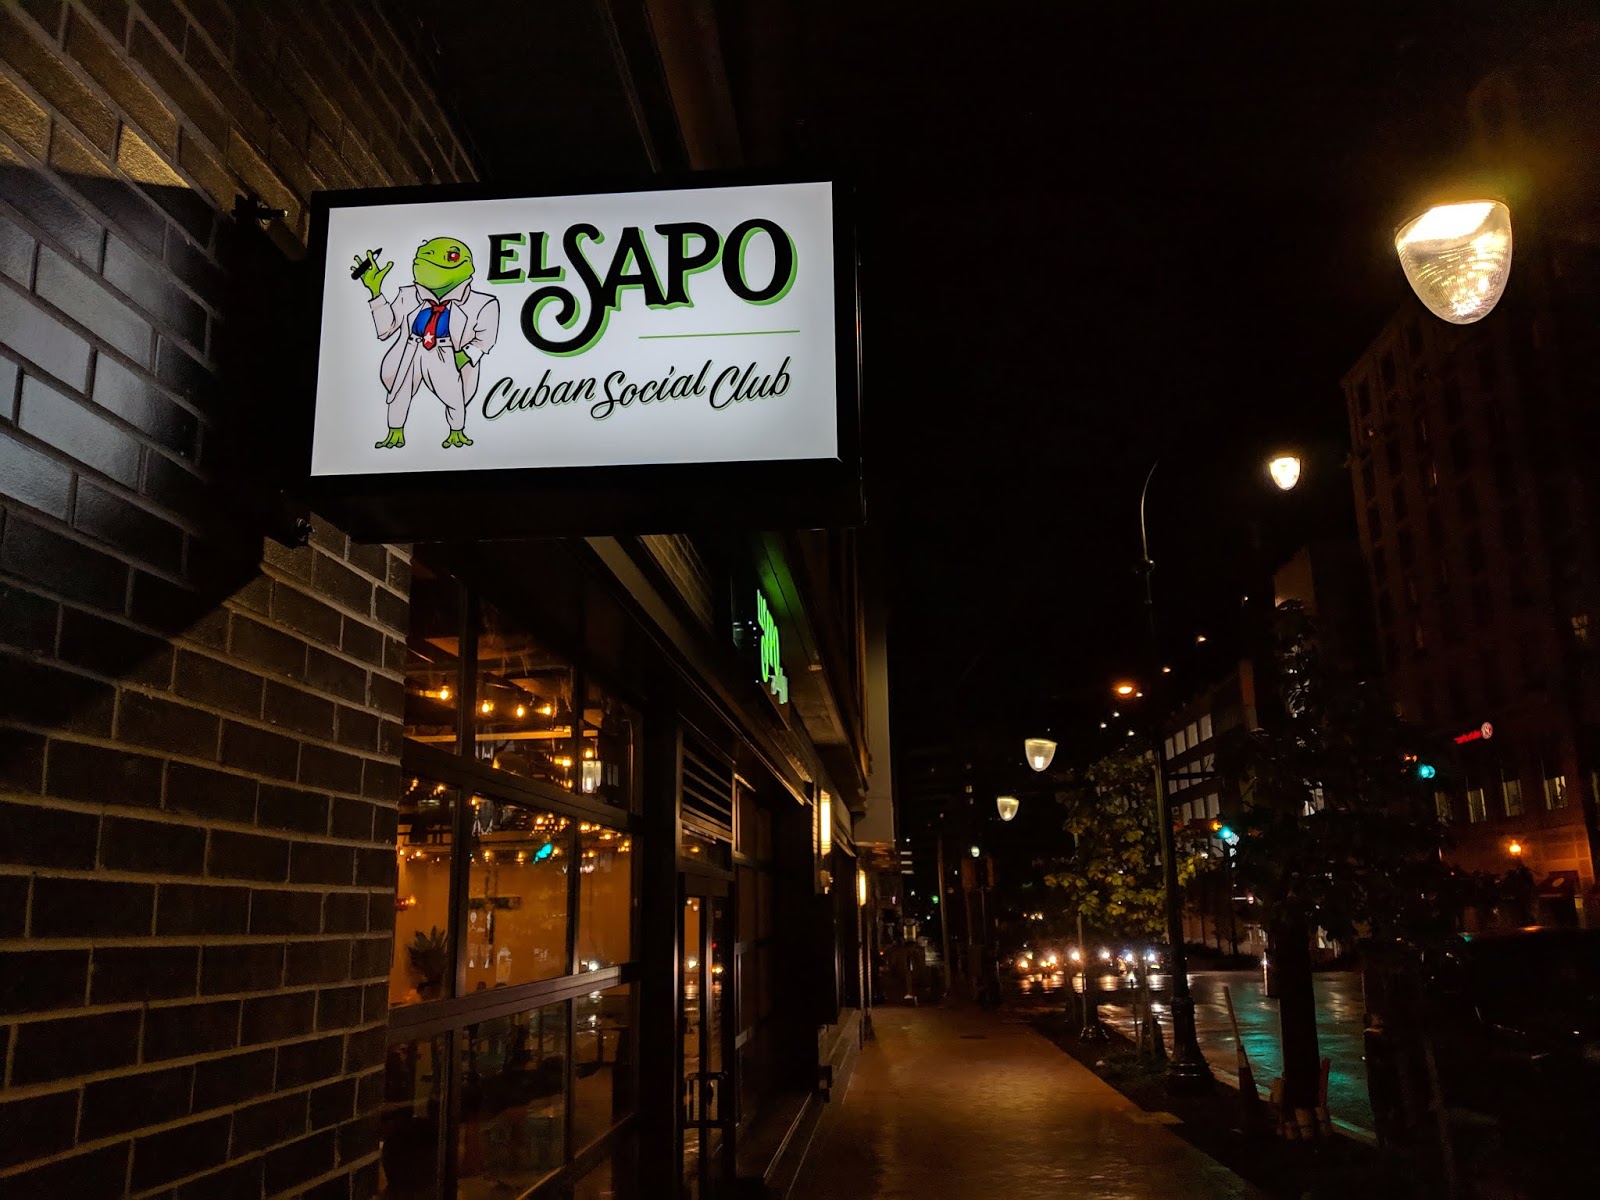 East MoCo: El Sapo Cuban Social Club opening Tuesday in Silver Spring